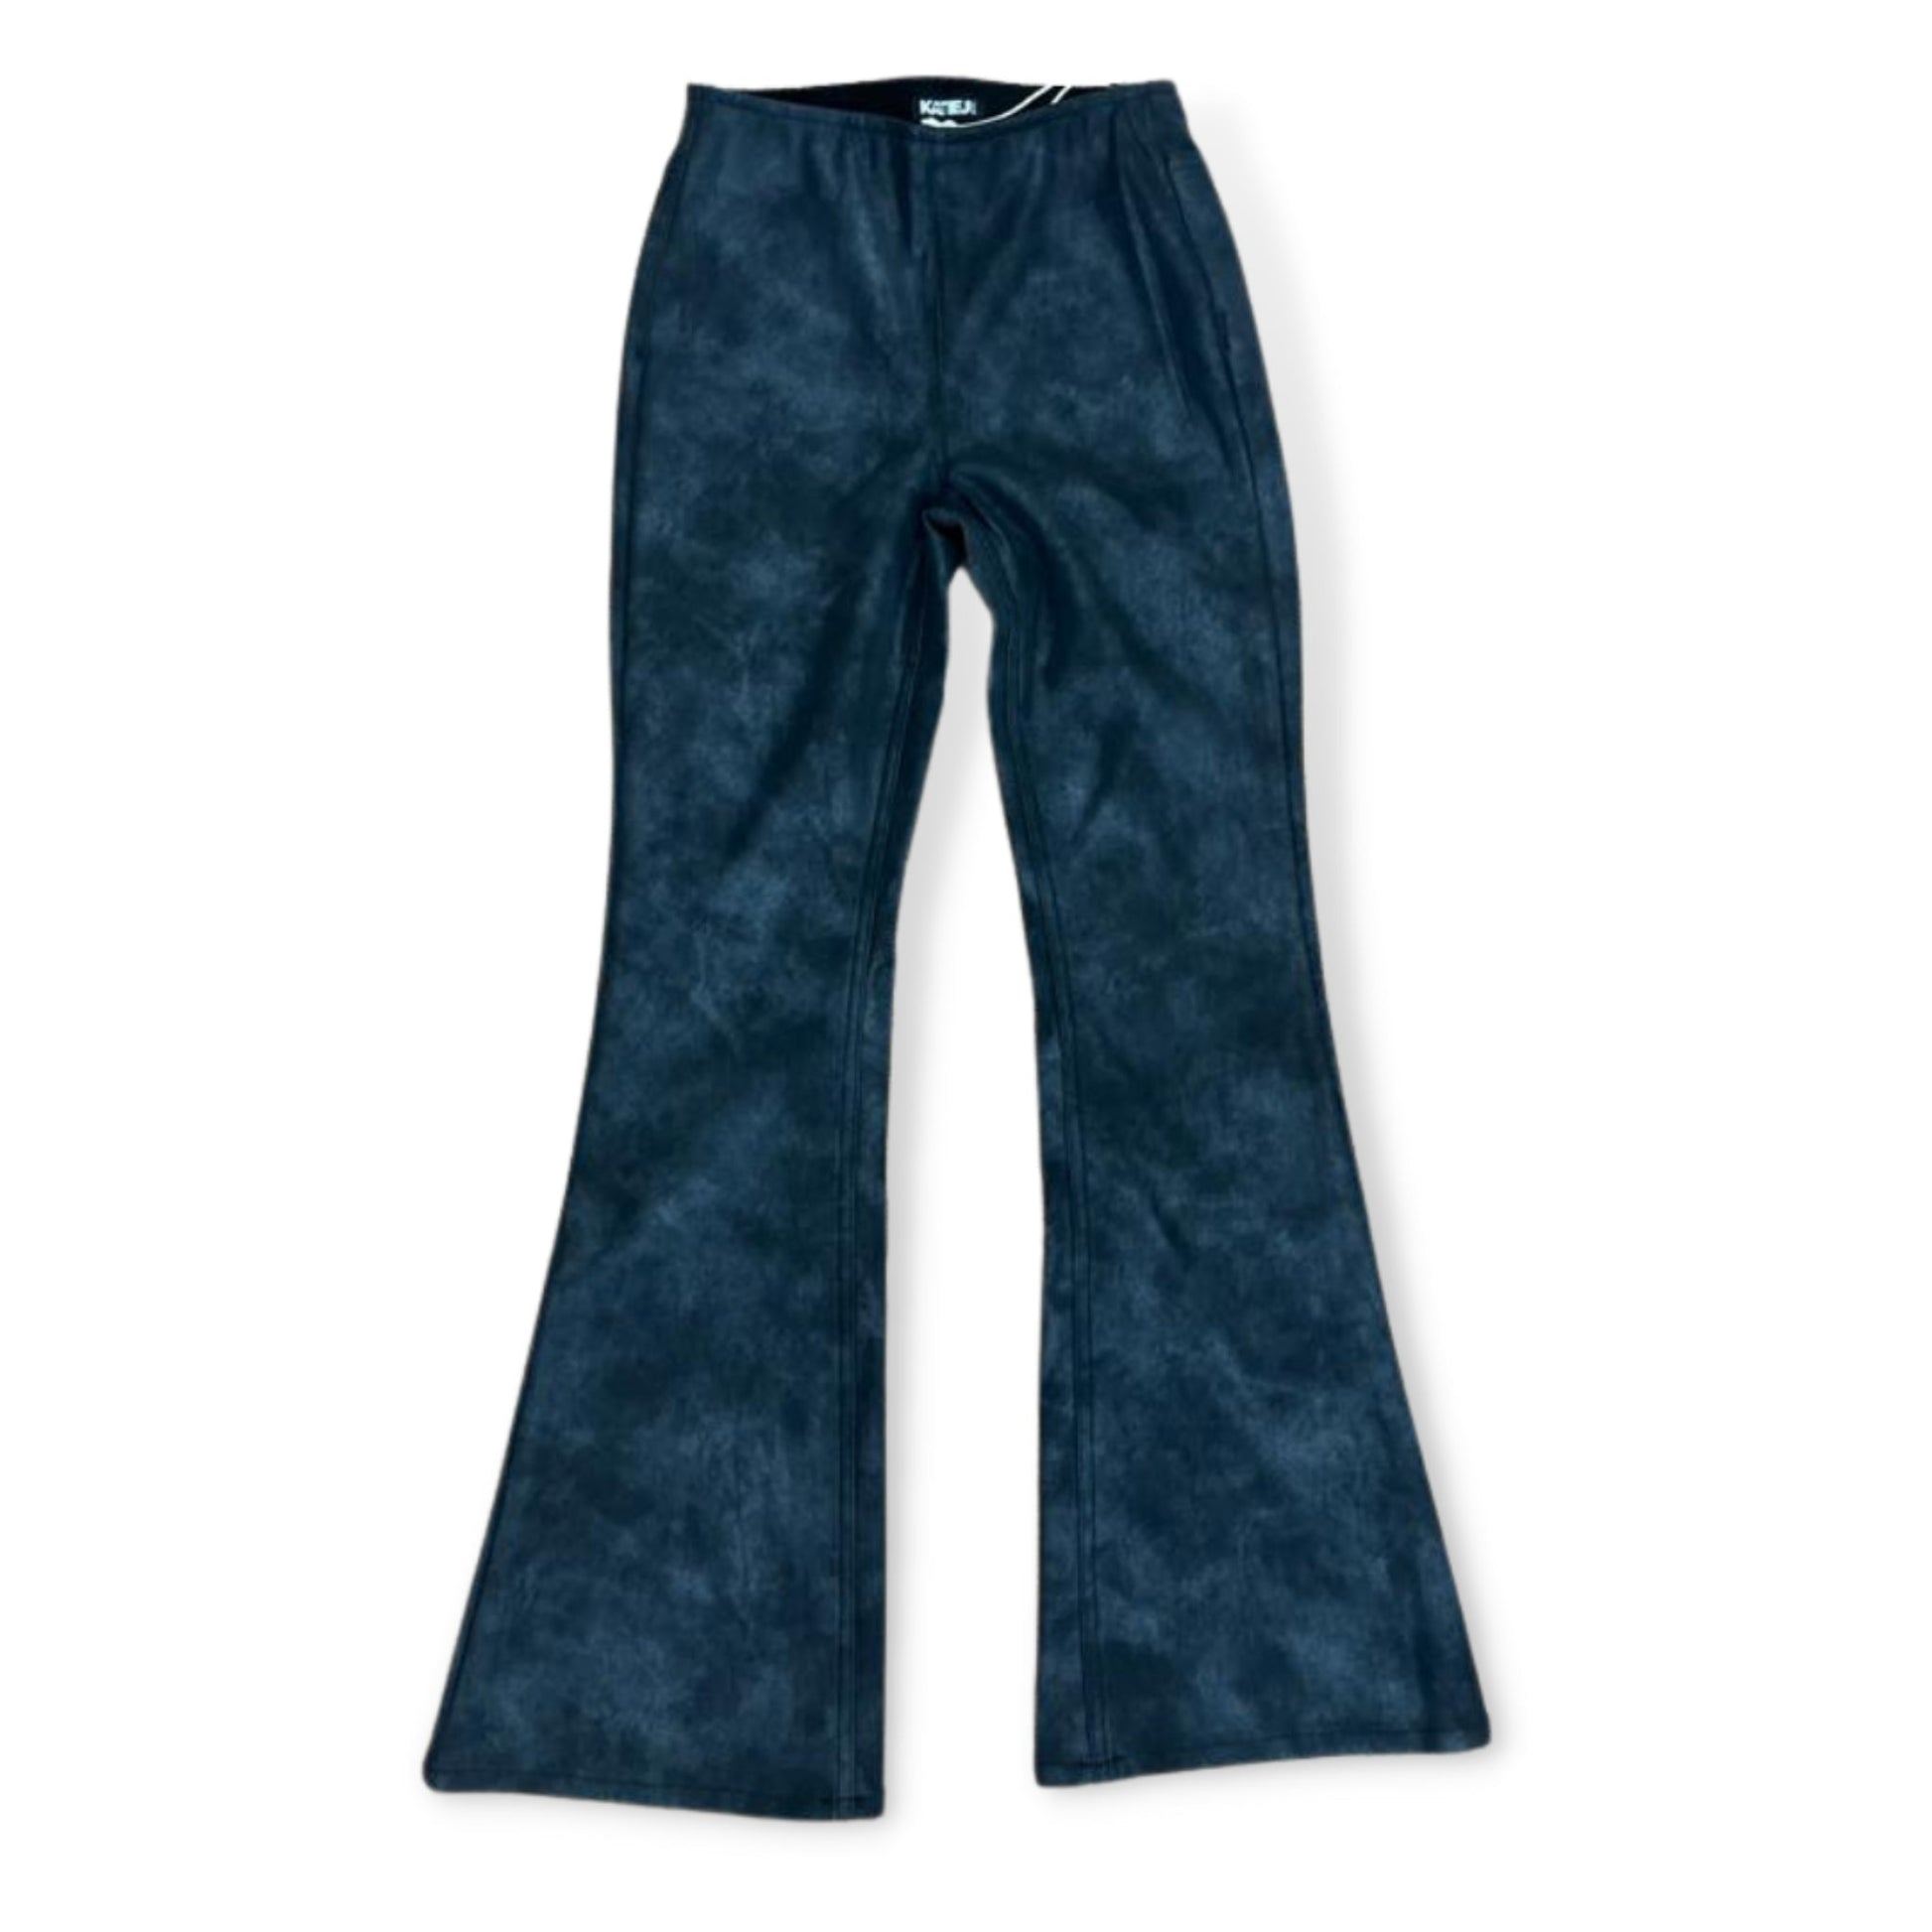 KatieJNYC Coated Steel Woodstock Pants - a Spirit Animal - Jeans $90-$120 active August 2023 bottoms